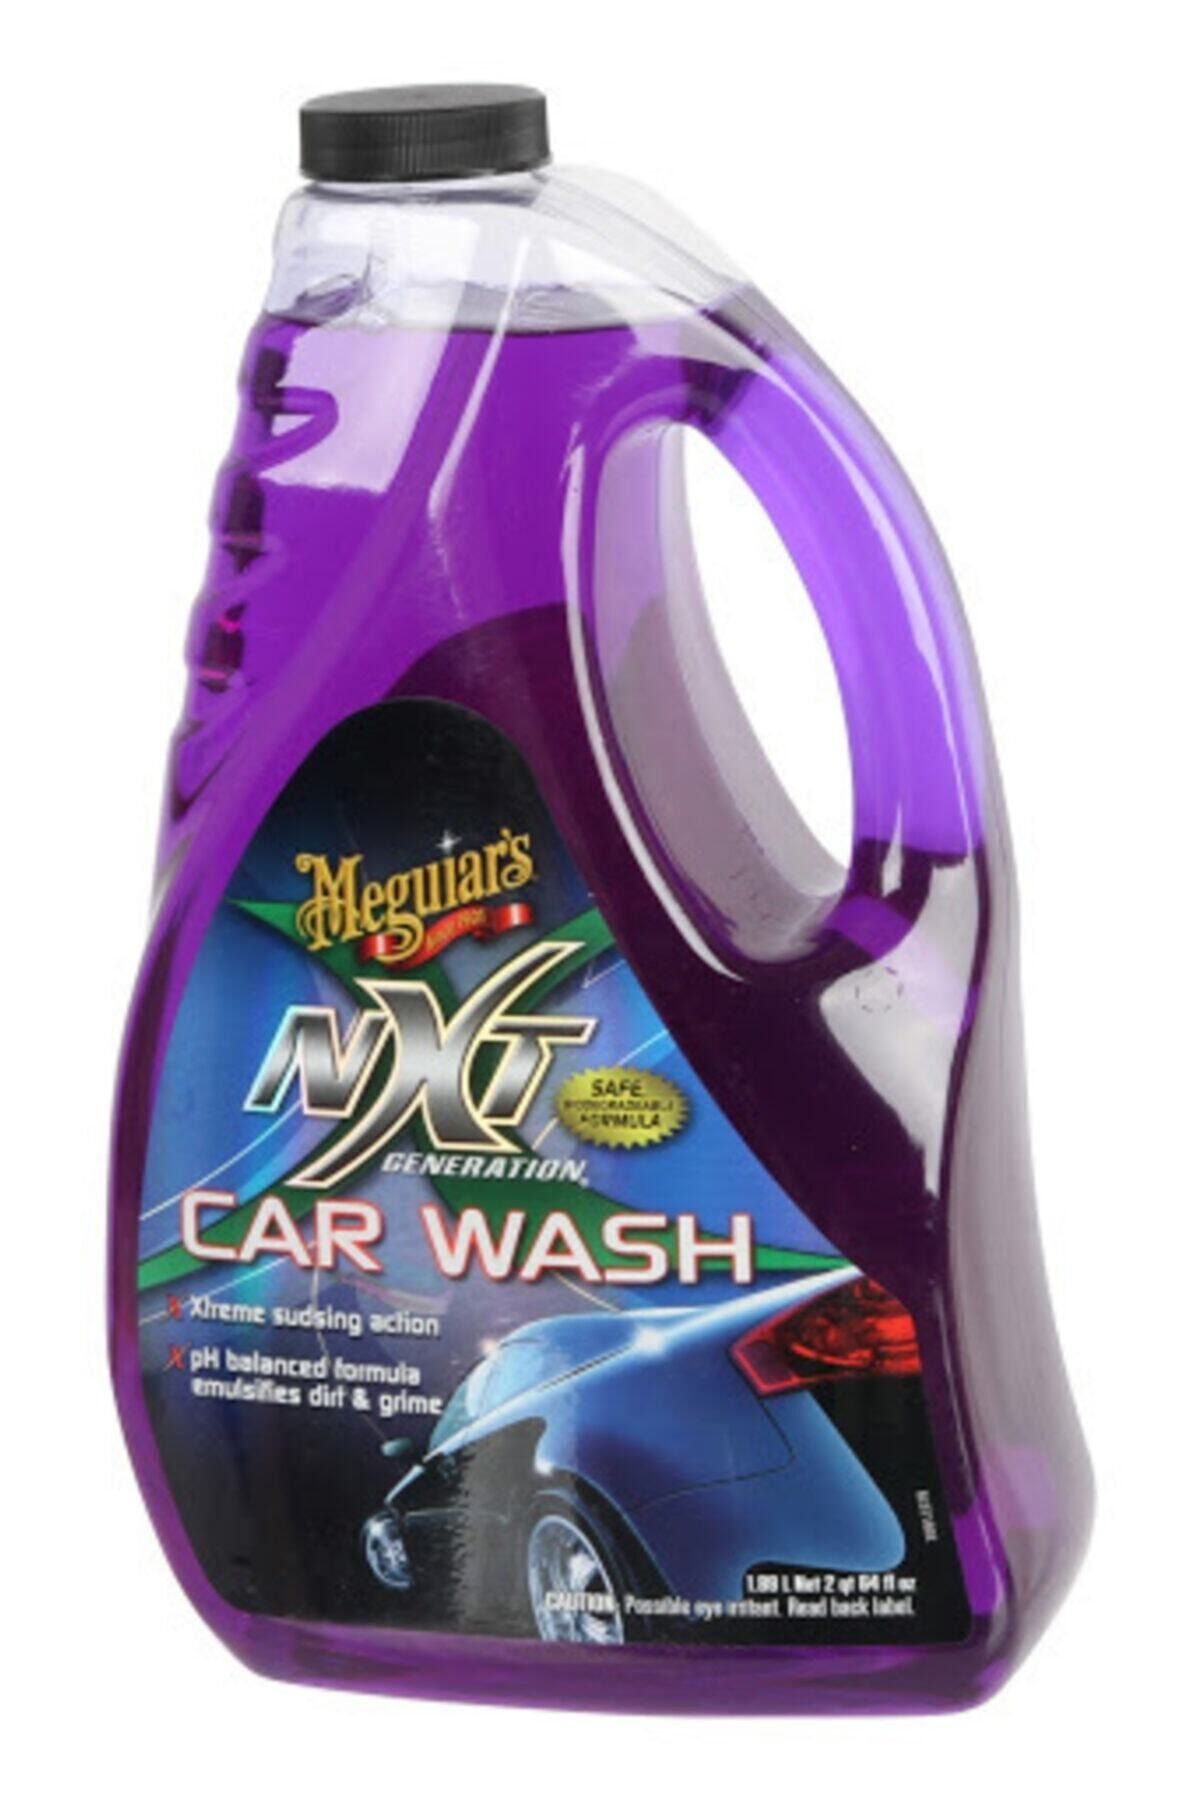 Meguiars Nxt Generation Car Wash Cilalı Koruyucu Şampuan